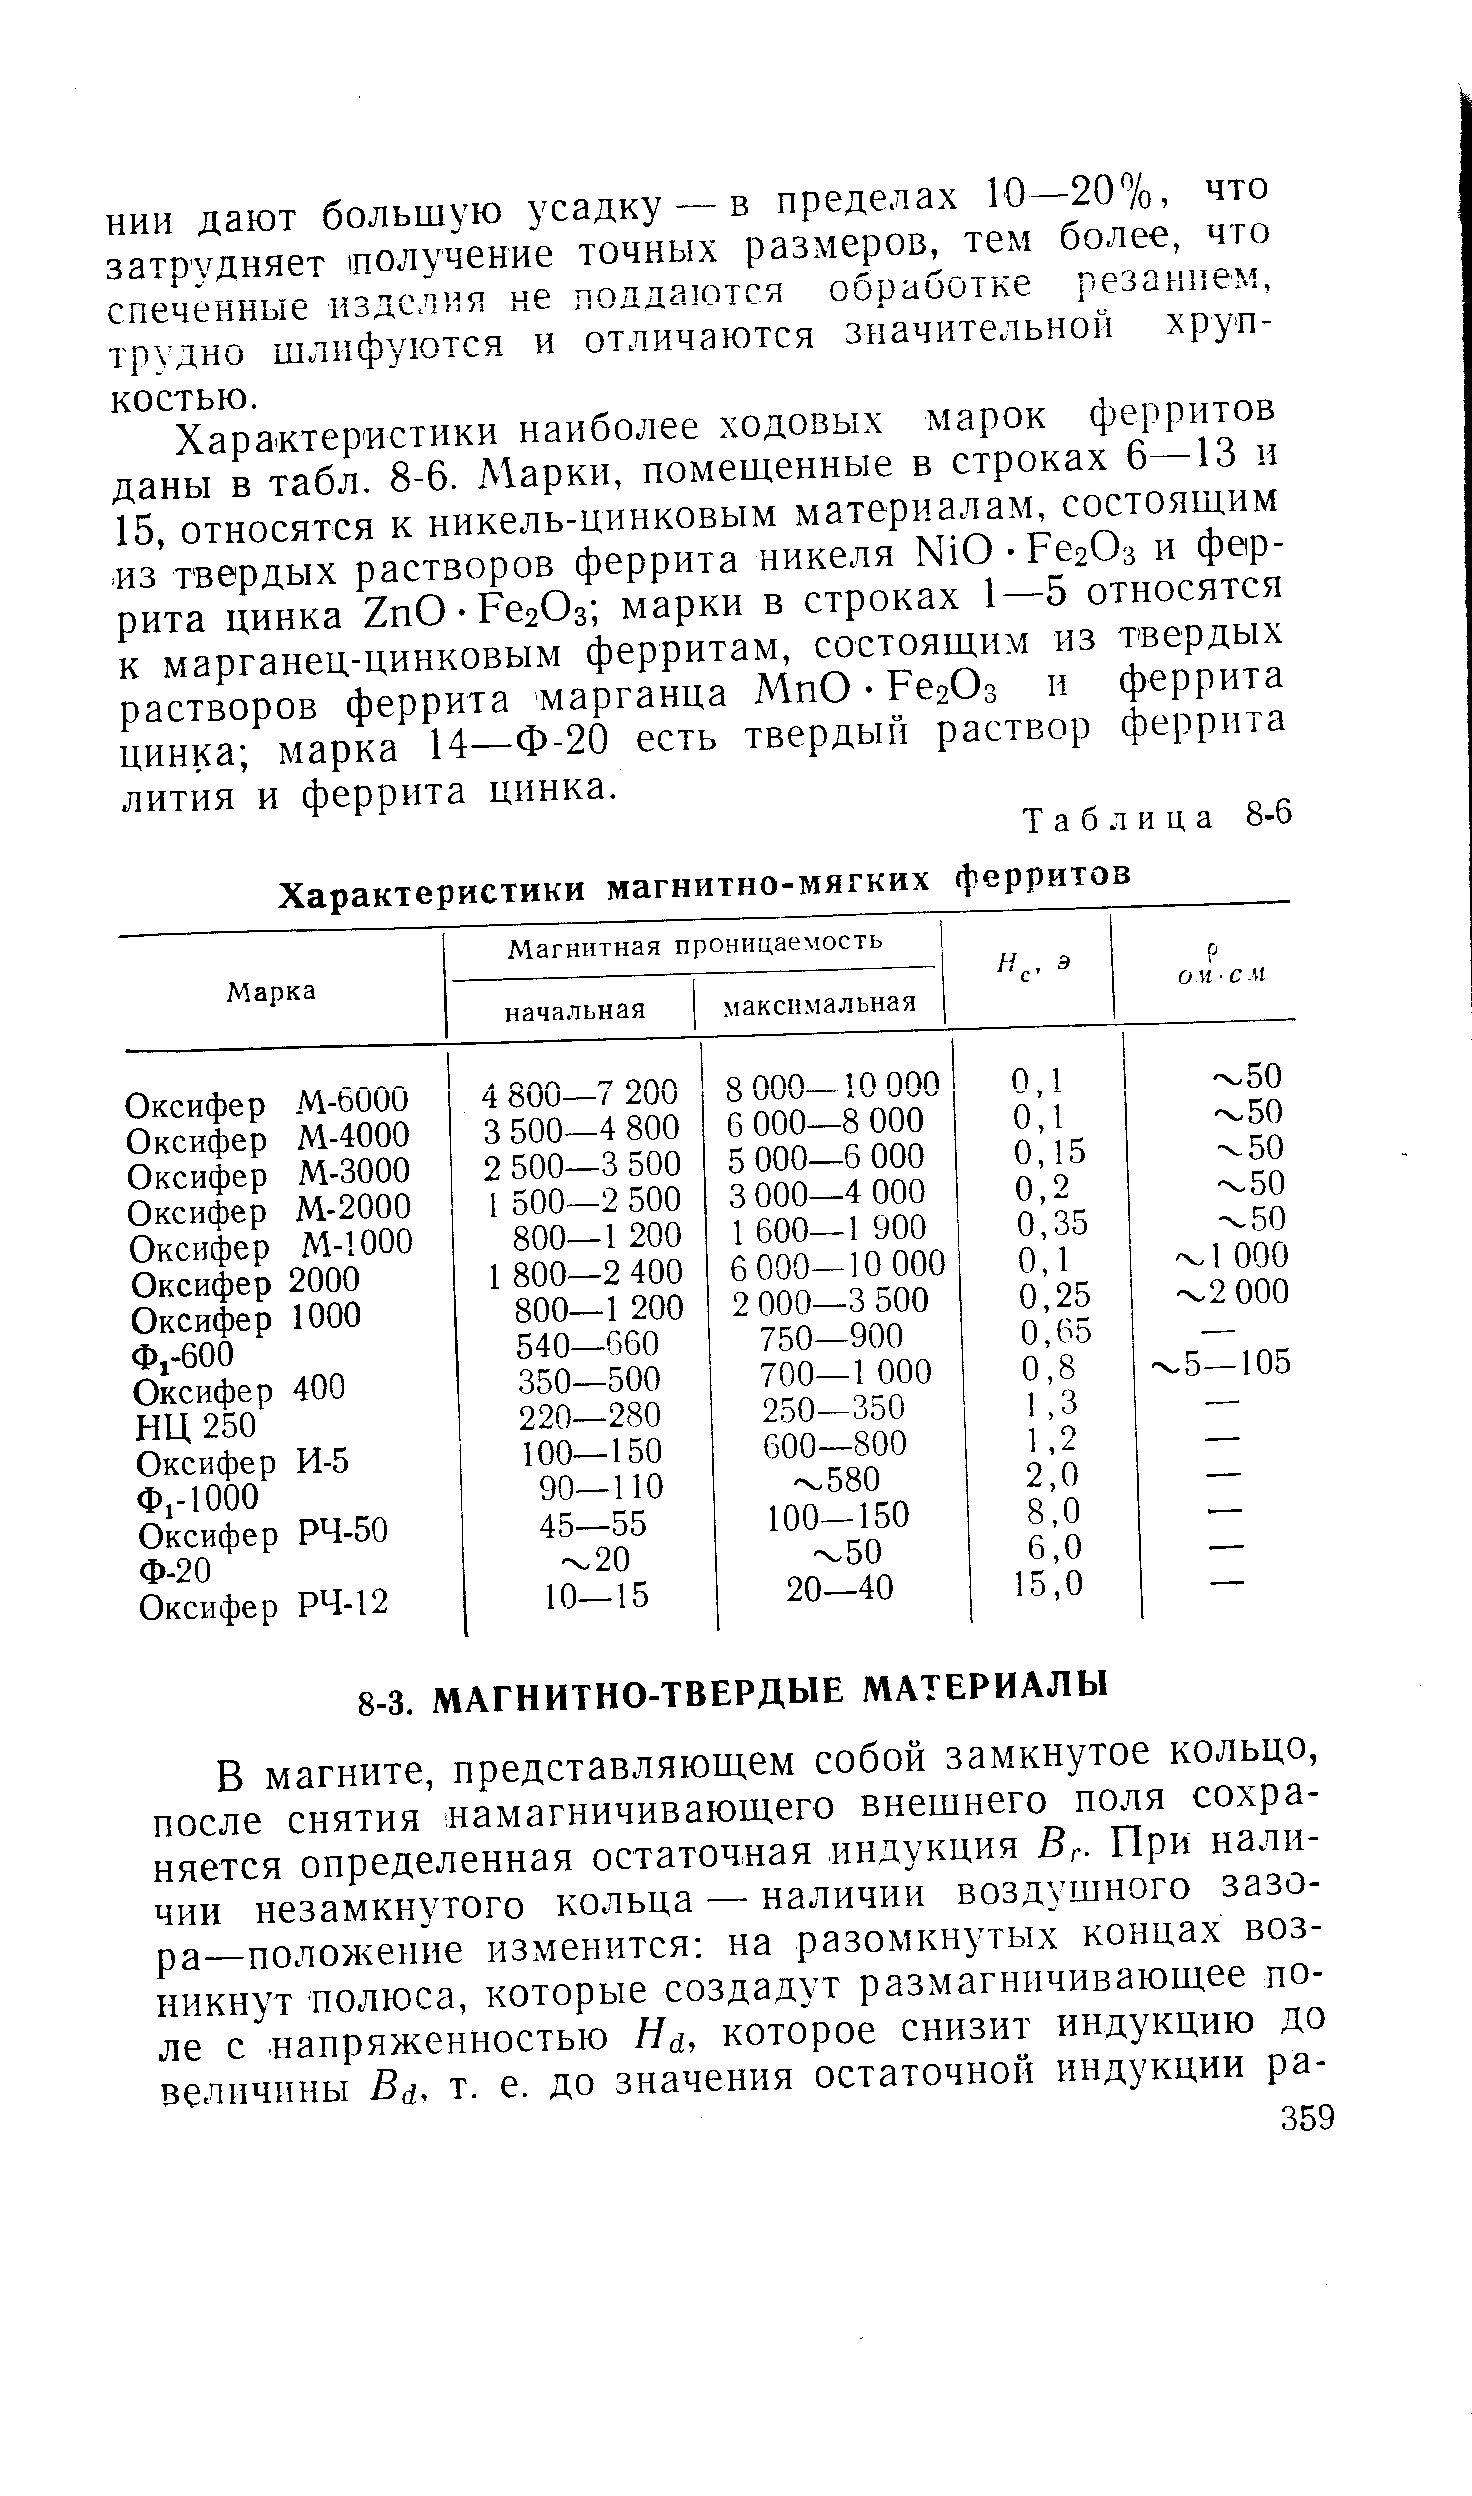 Таблица 8-6 Характеристики магнитно-мягких ферритов
